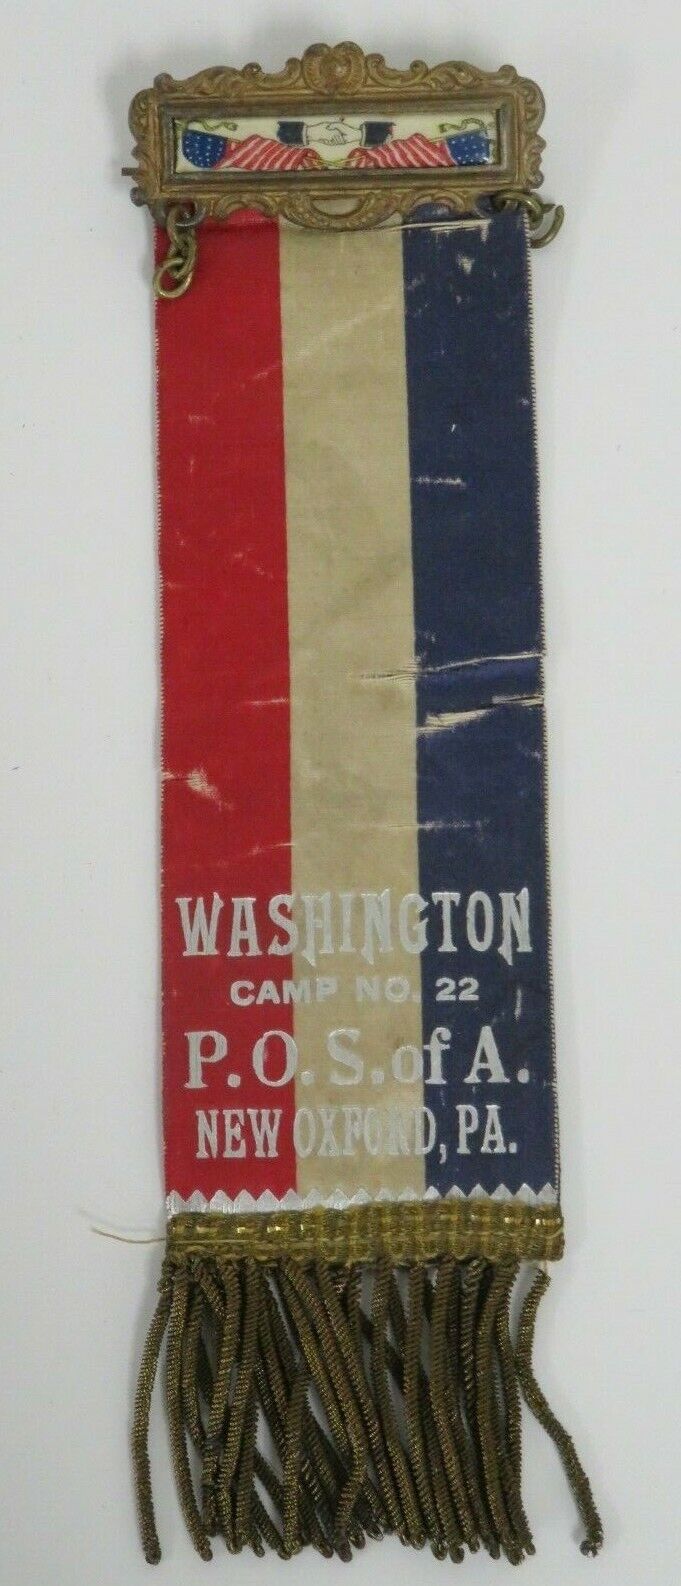 Antique P. O. S. of A Washington - Camp 22 New Oxford, PA Reversible Ribbon